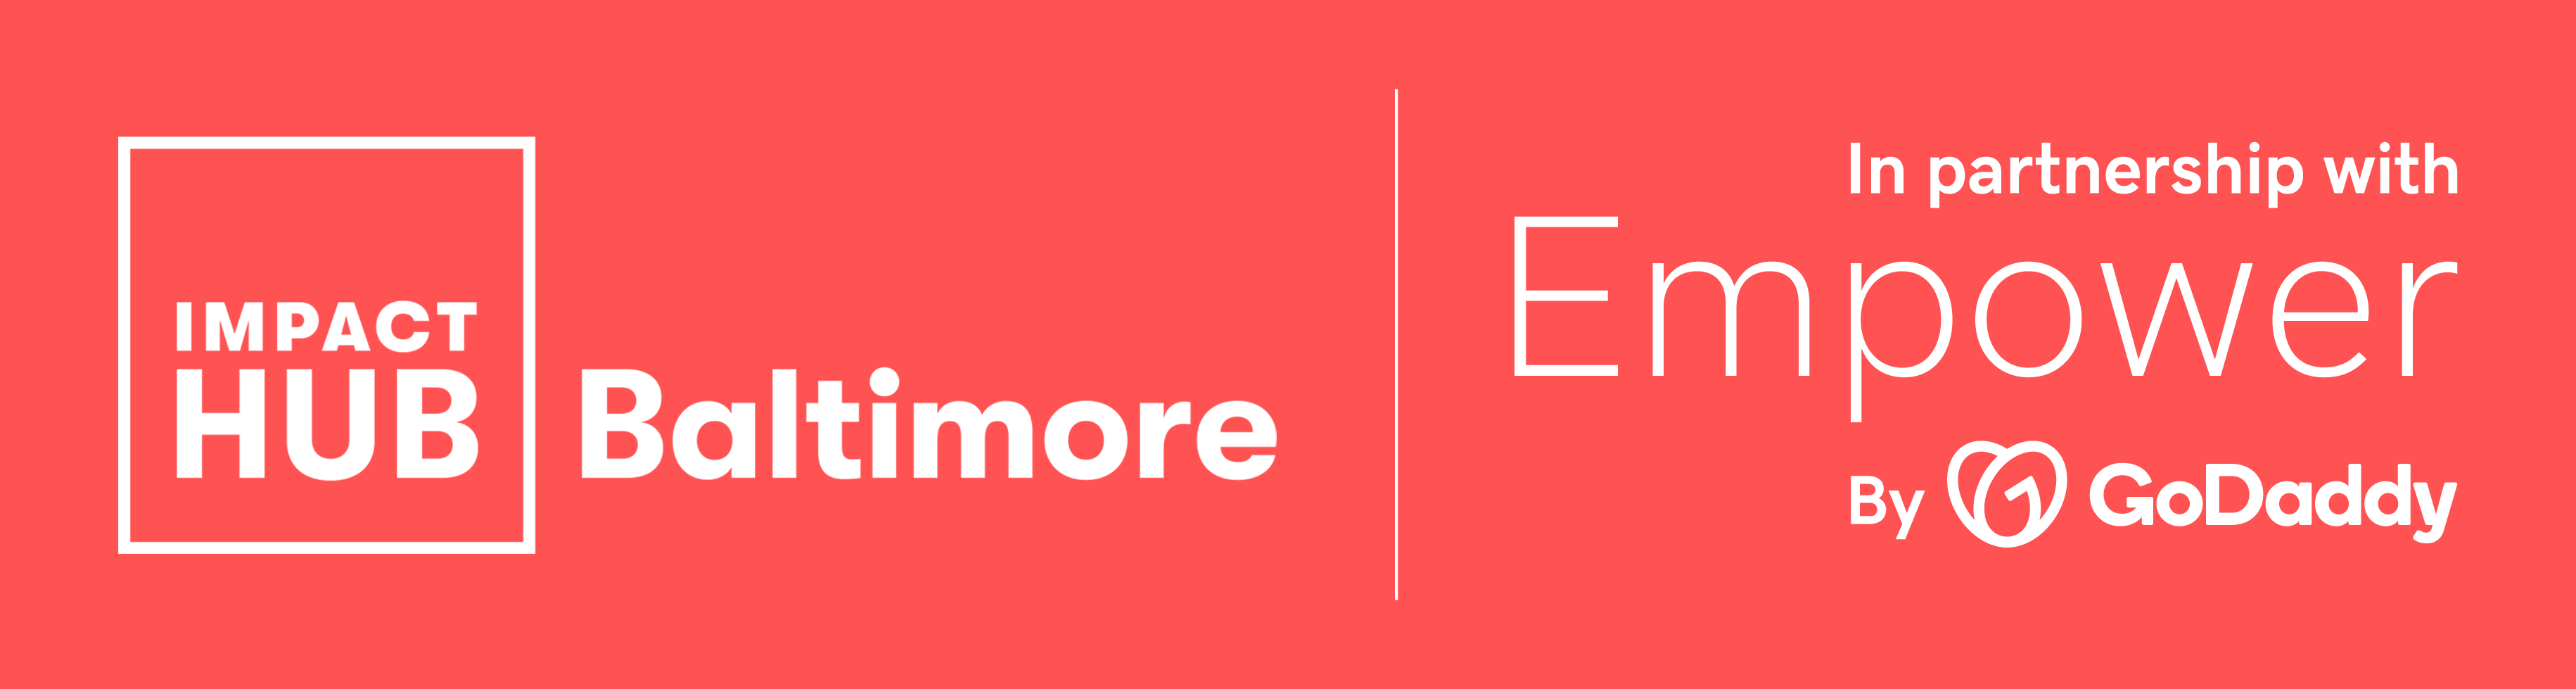 Empower Baltimore logo